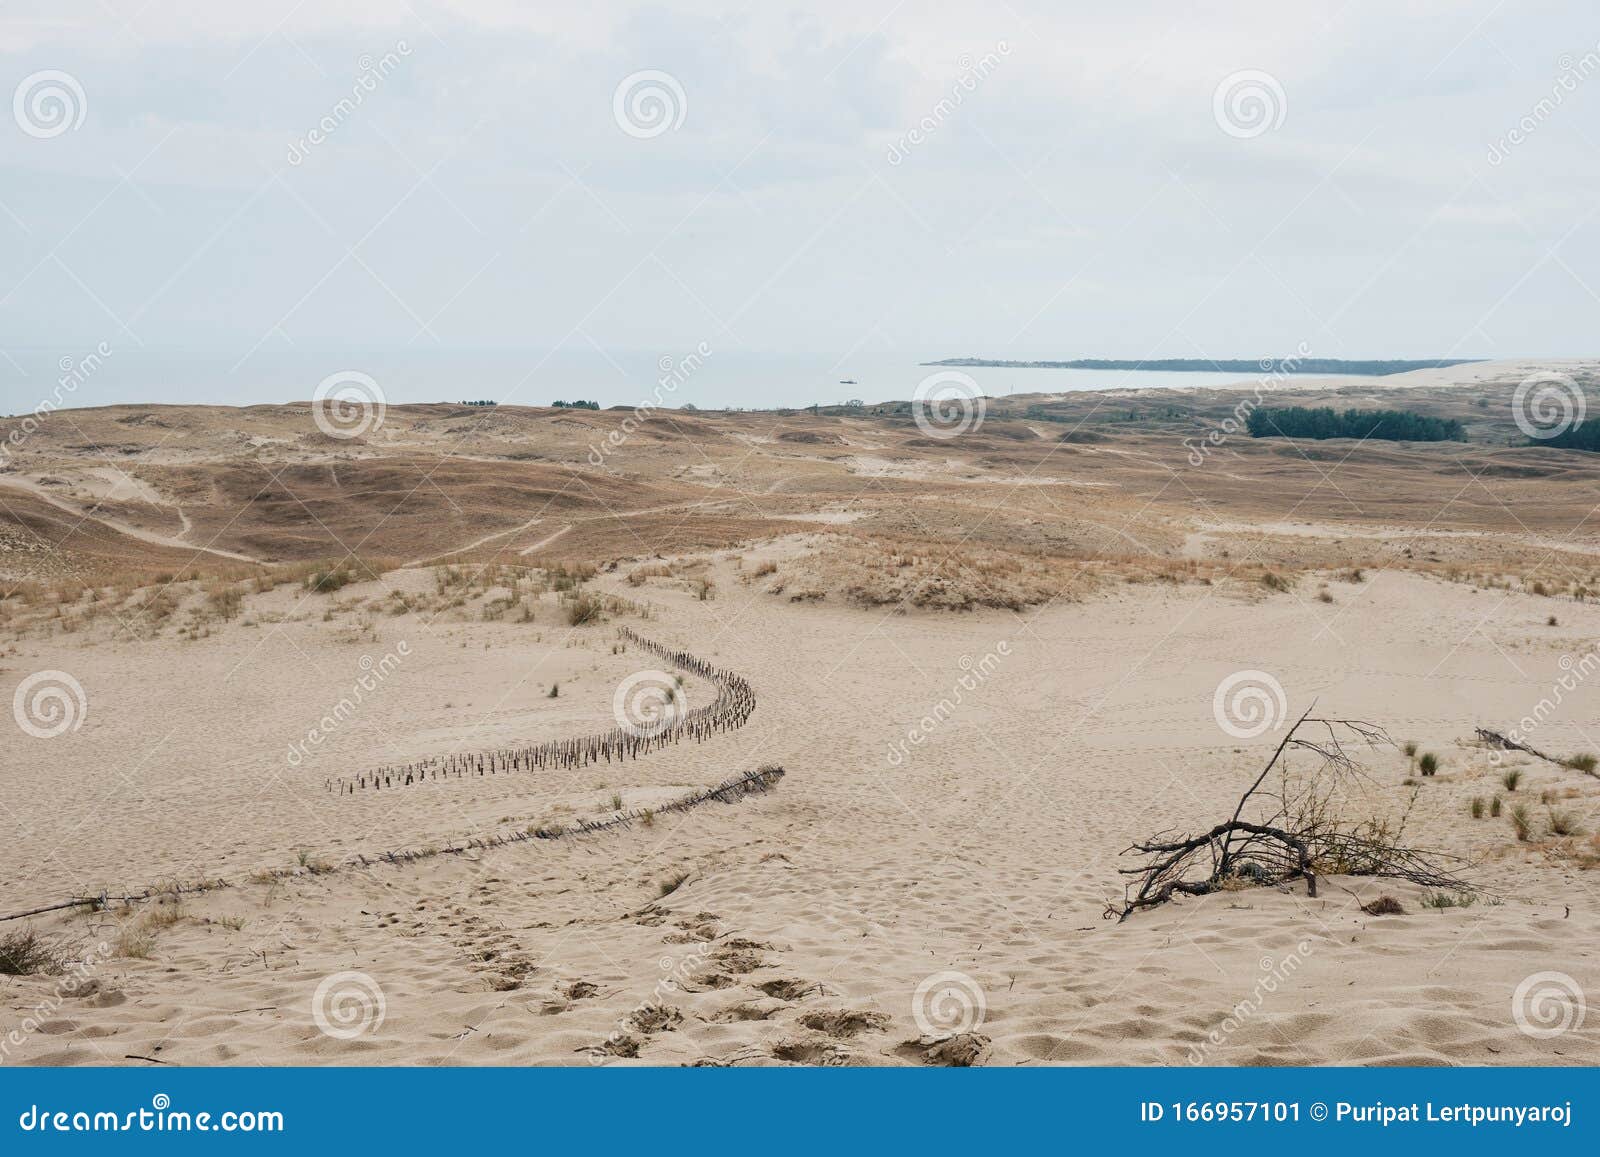 parnidis dune in nida, lituania